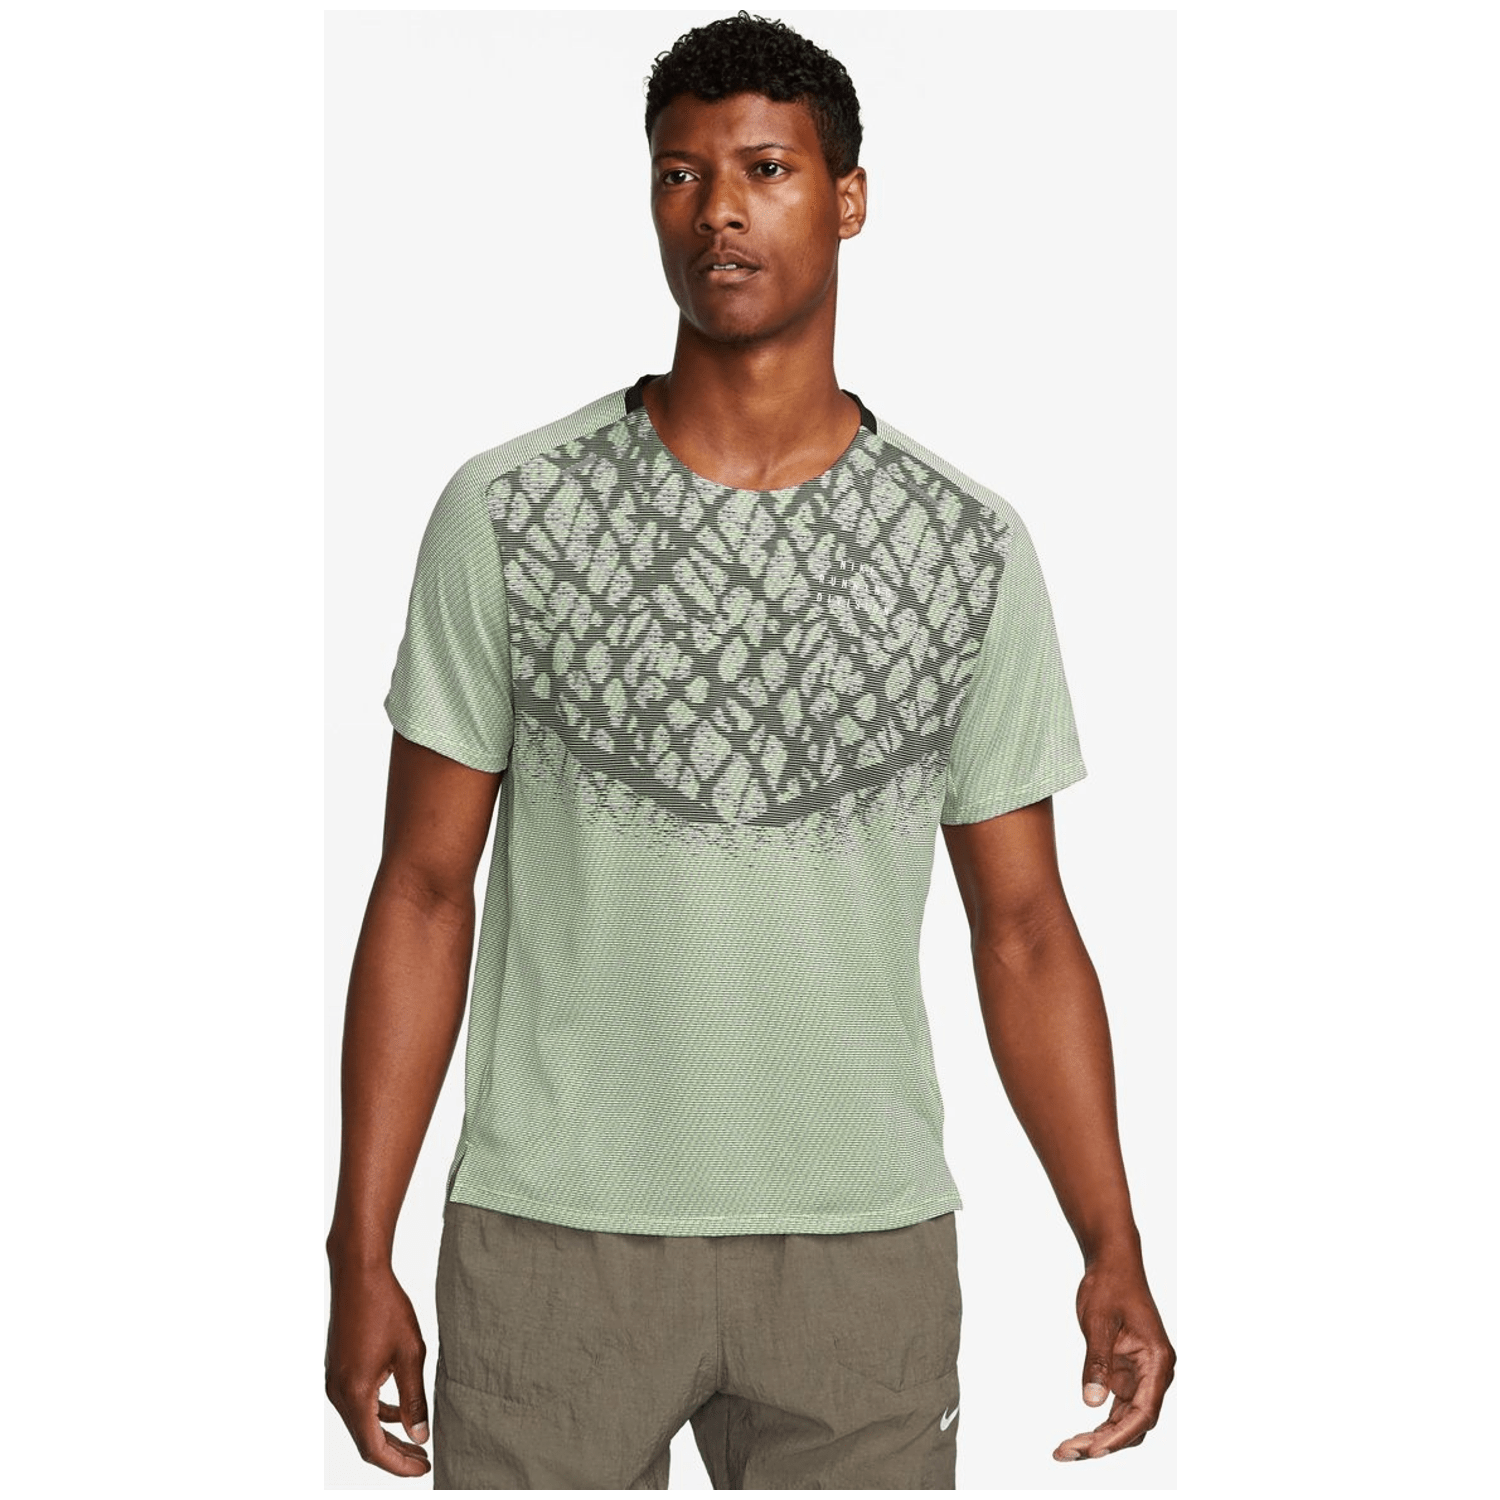 Nike Dri-FIT ADV Run Division Techknit Top Herren T-Shirt